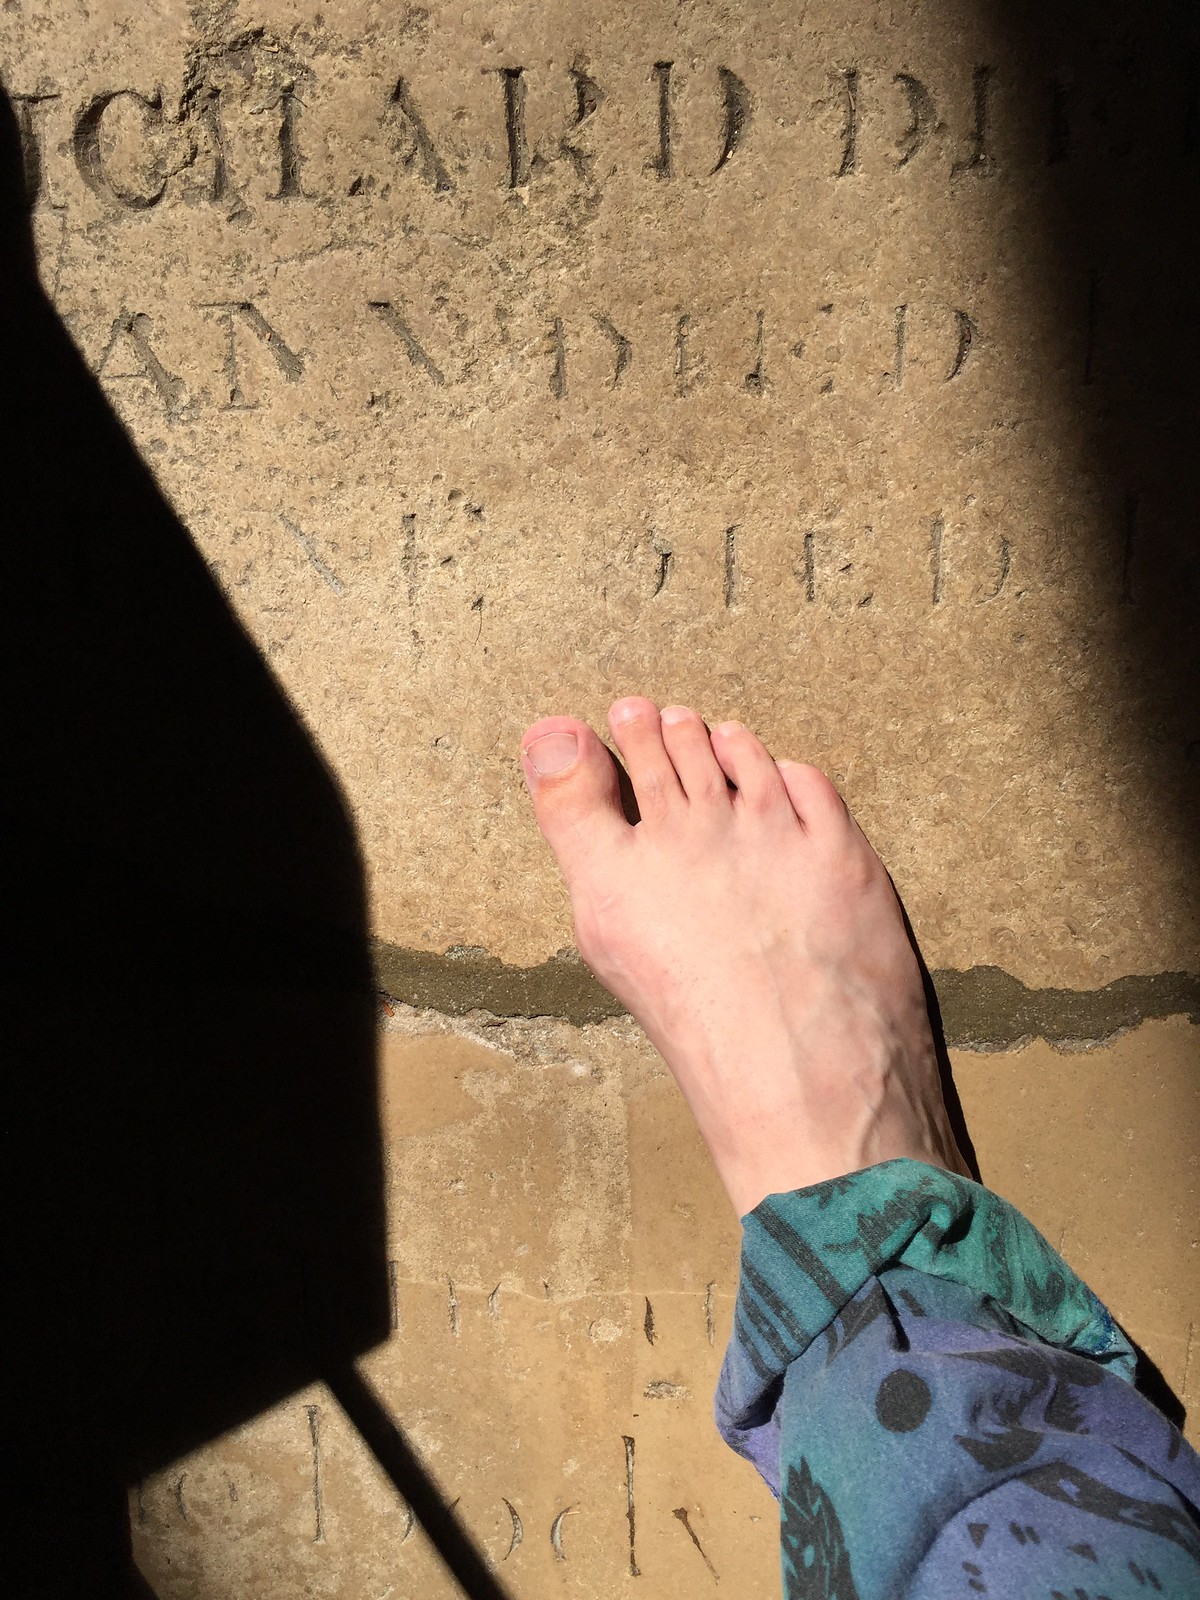 In Wimborne Minster - barefoot